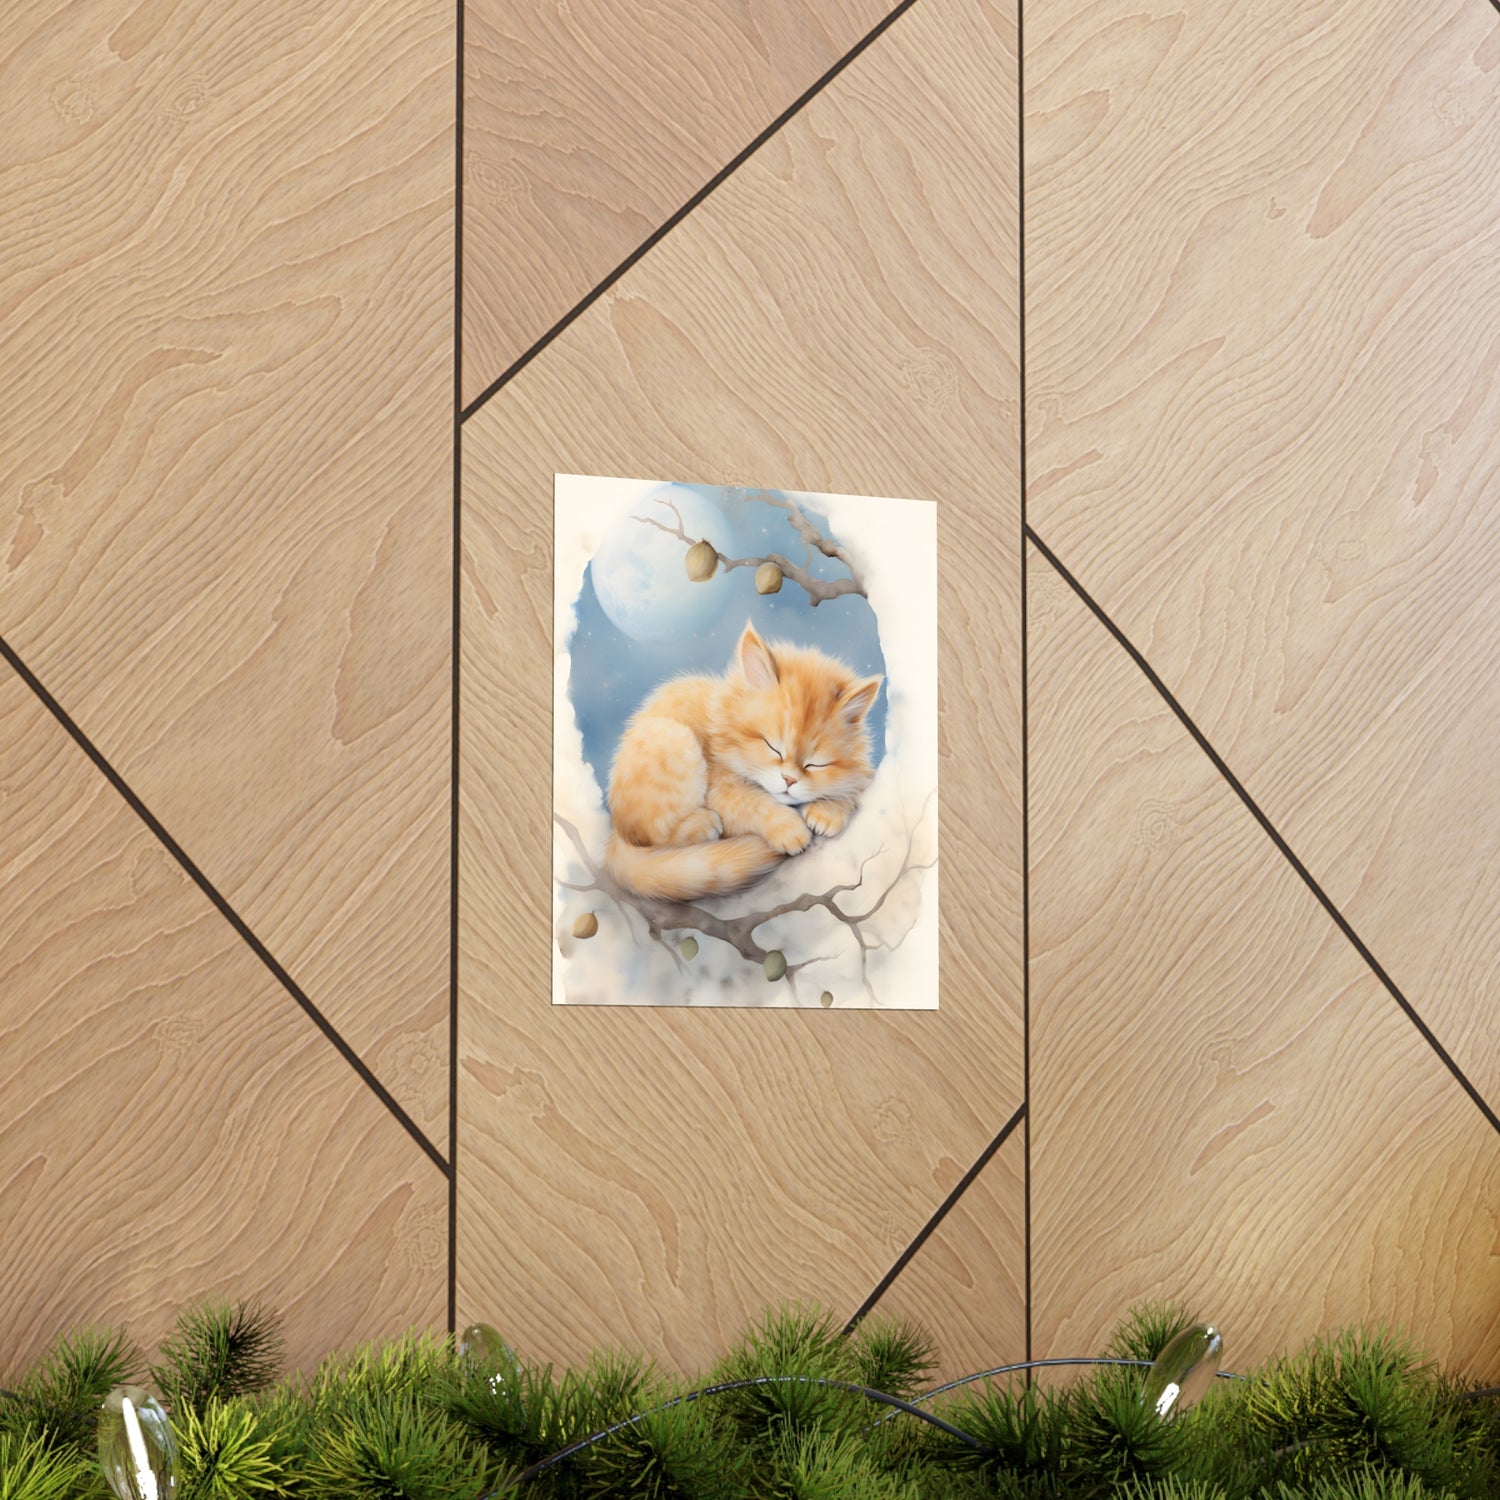 Cute sleeping Cat, Nursery Print, Baby cat Illustration, Watercolor Art, Nursery Wall Decor, Lovable kitty, Nursery Decor, Nursery Wall Art. - CosmicDeva